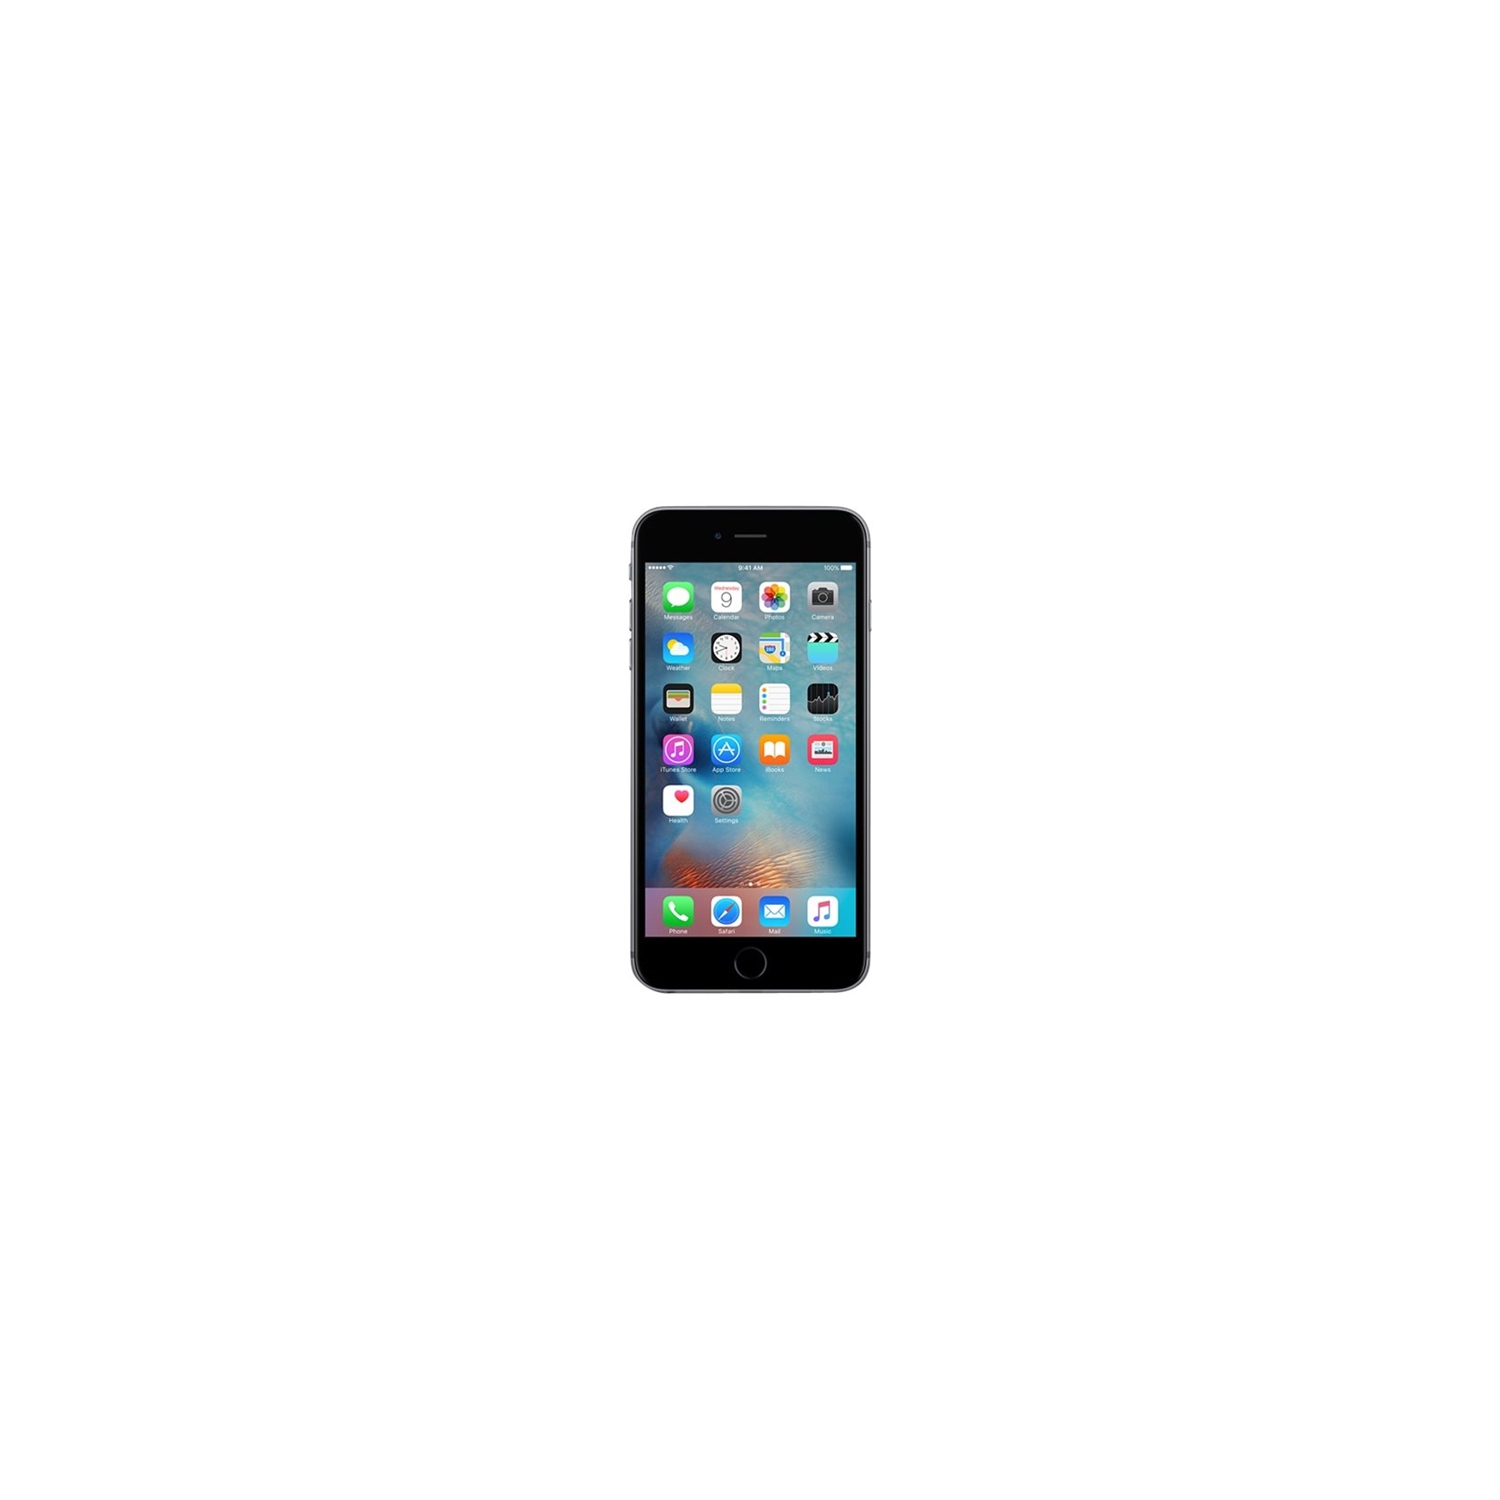 Refurbished (Good) - Apple iPhone 6s Plus 32GB Smartphone - Space Gray - Unlocked